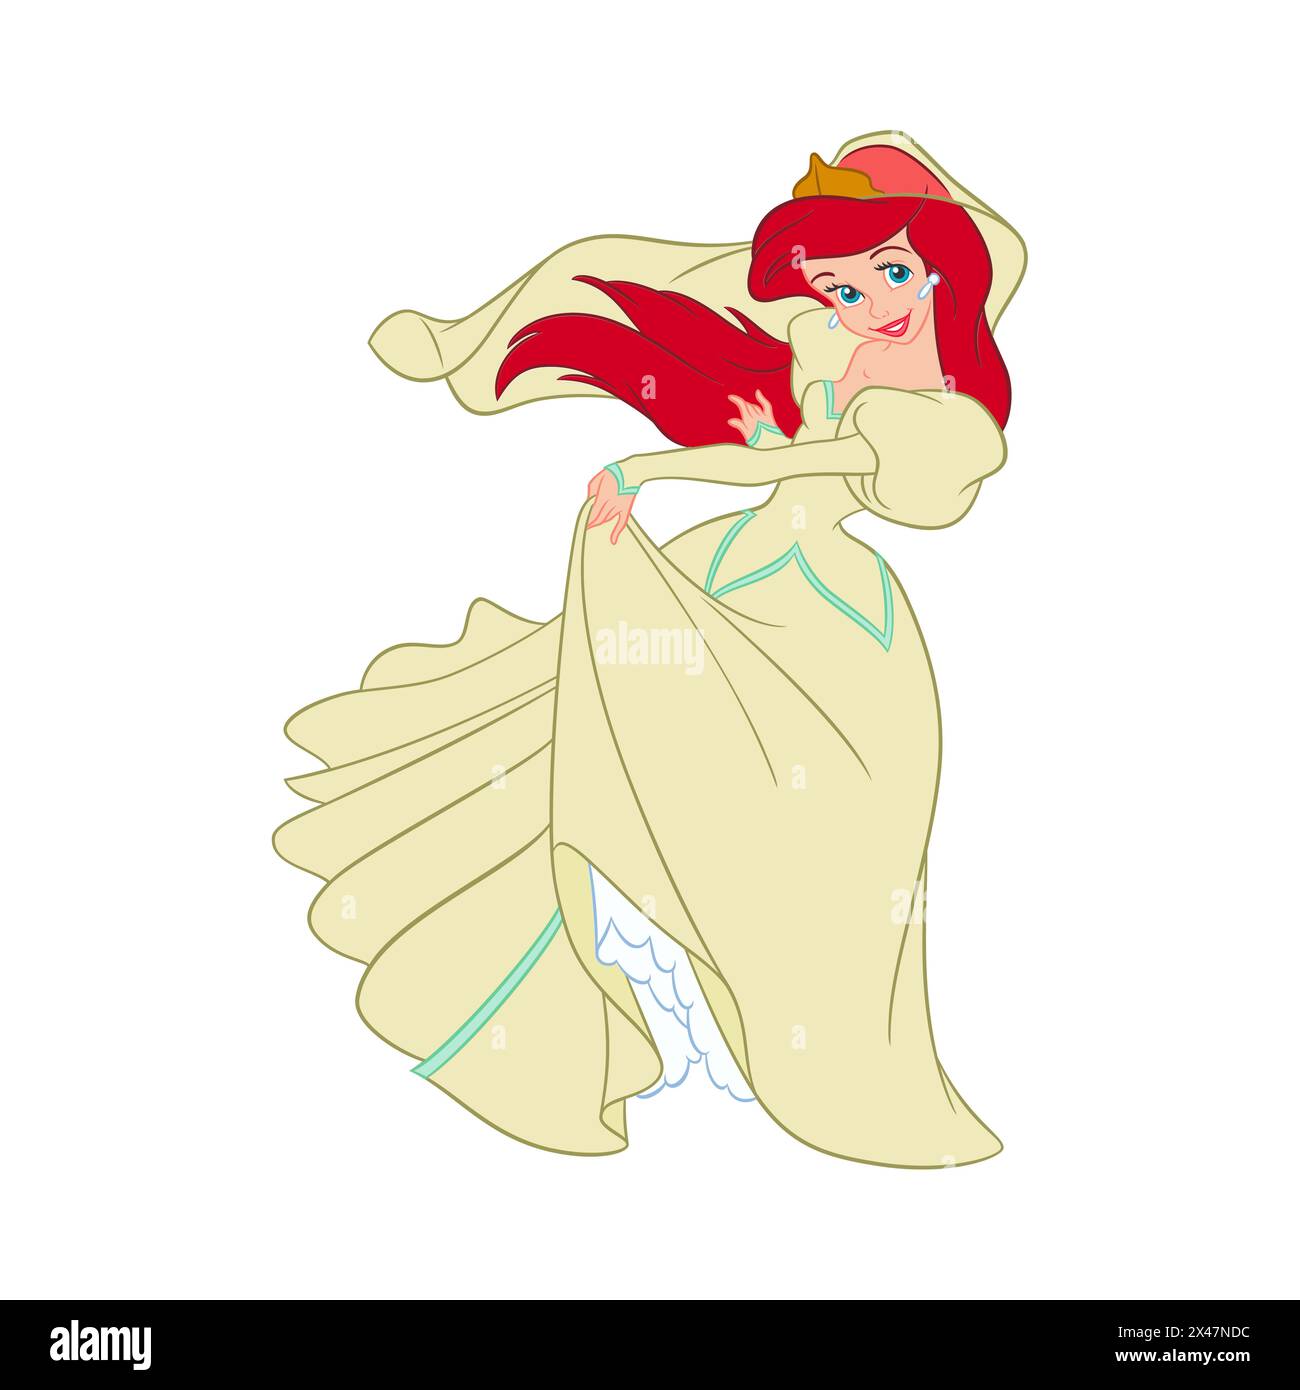 Disney princess ariel magic fairy tale fantasy vector illustration Stock Vector